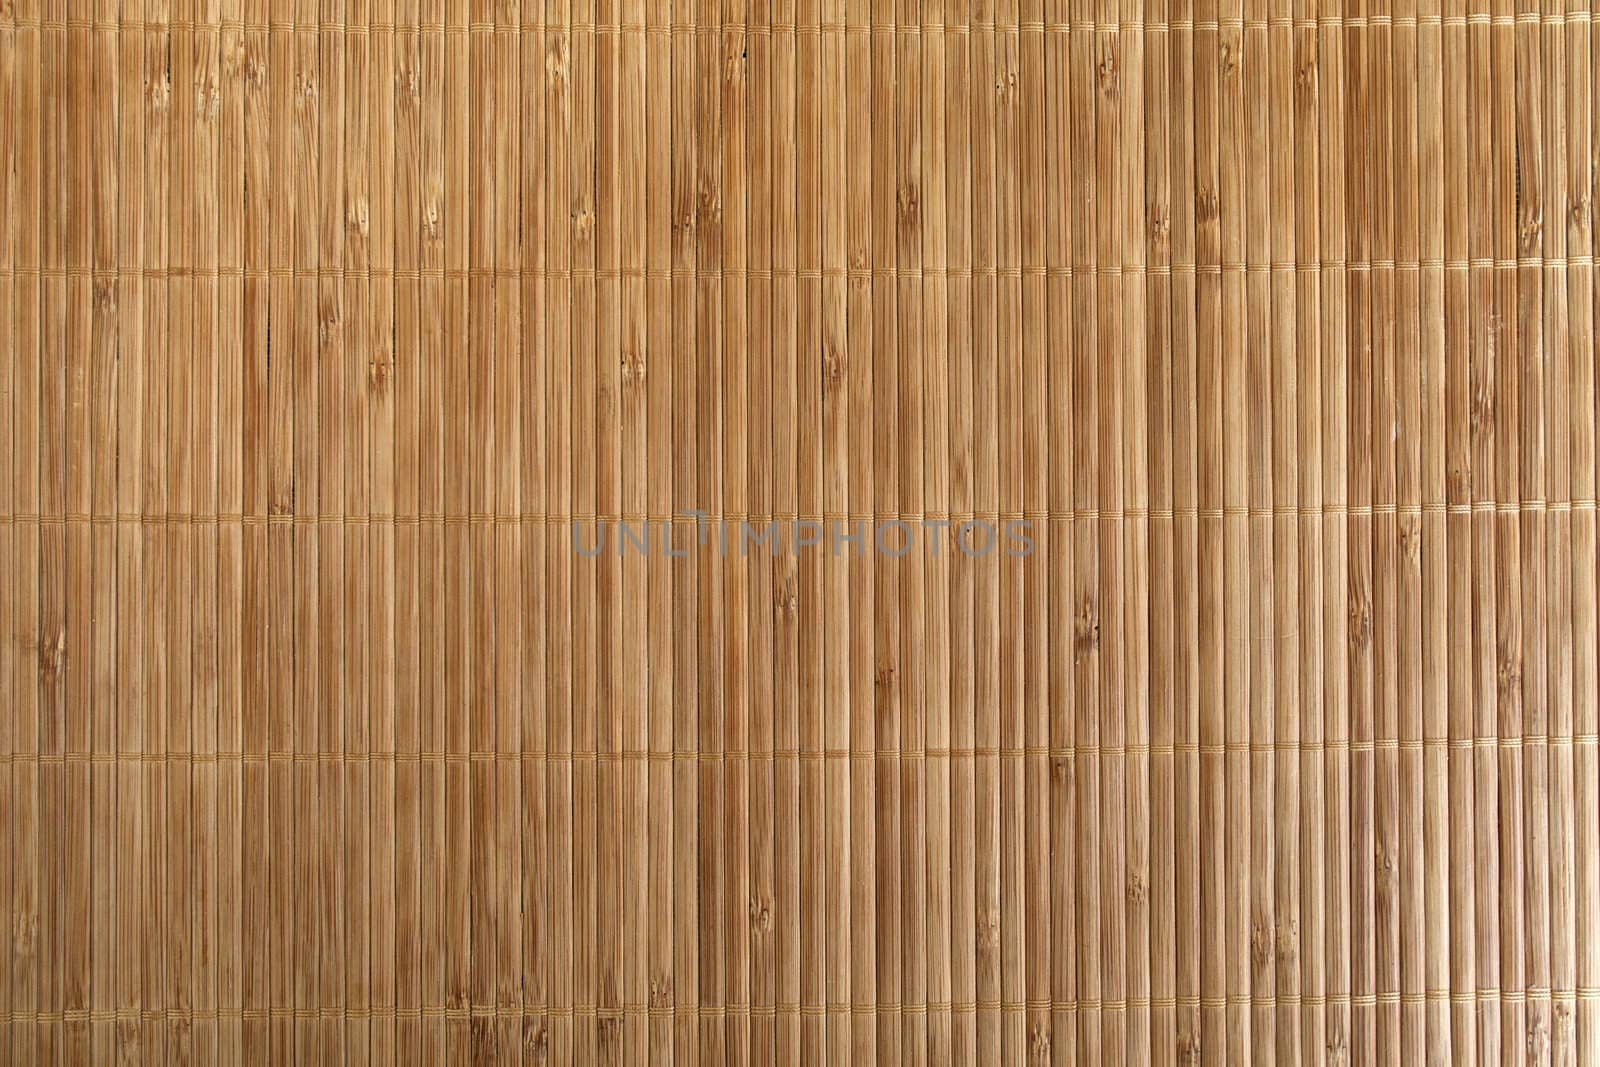 Bamboo sticks background by shamtor